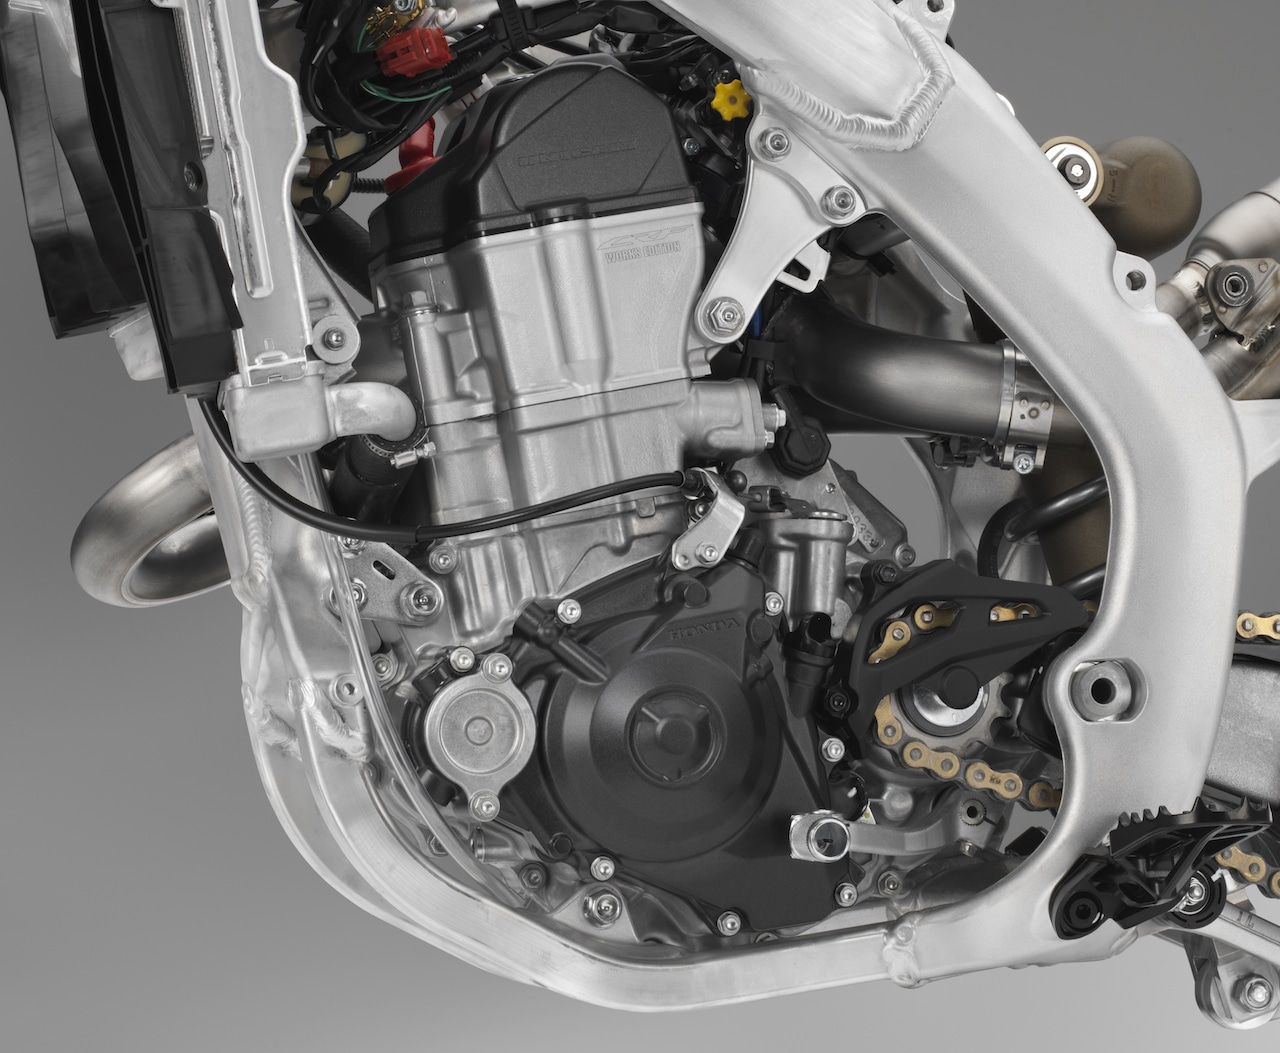 2019 Honda CRF450R WE engine